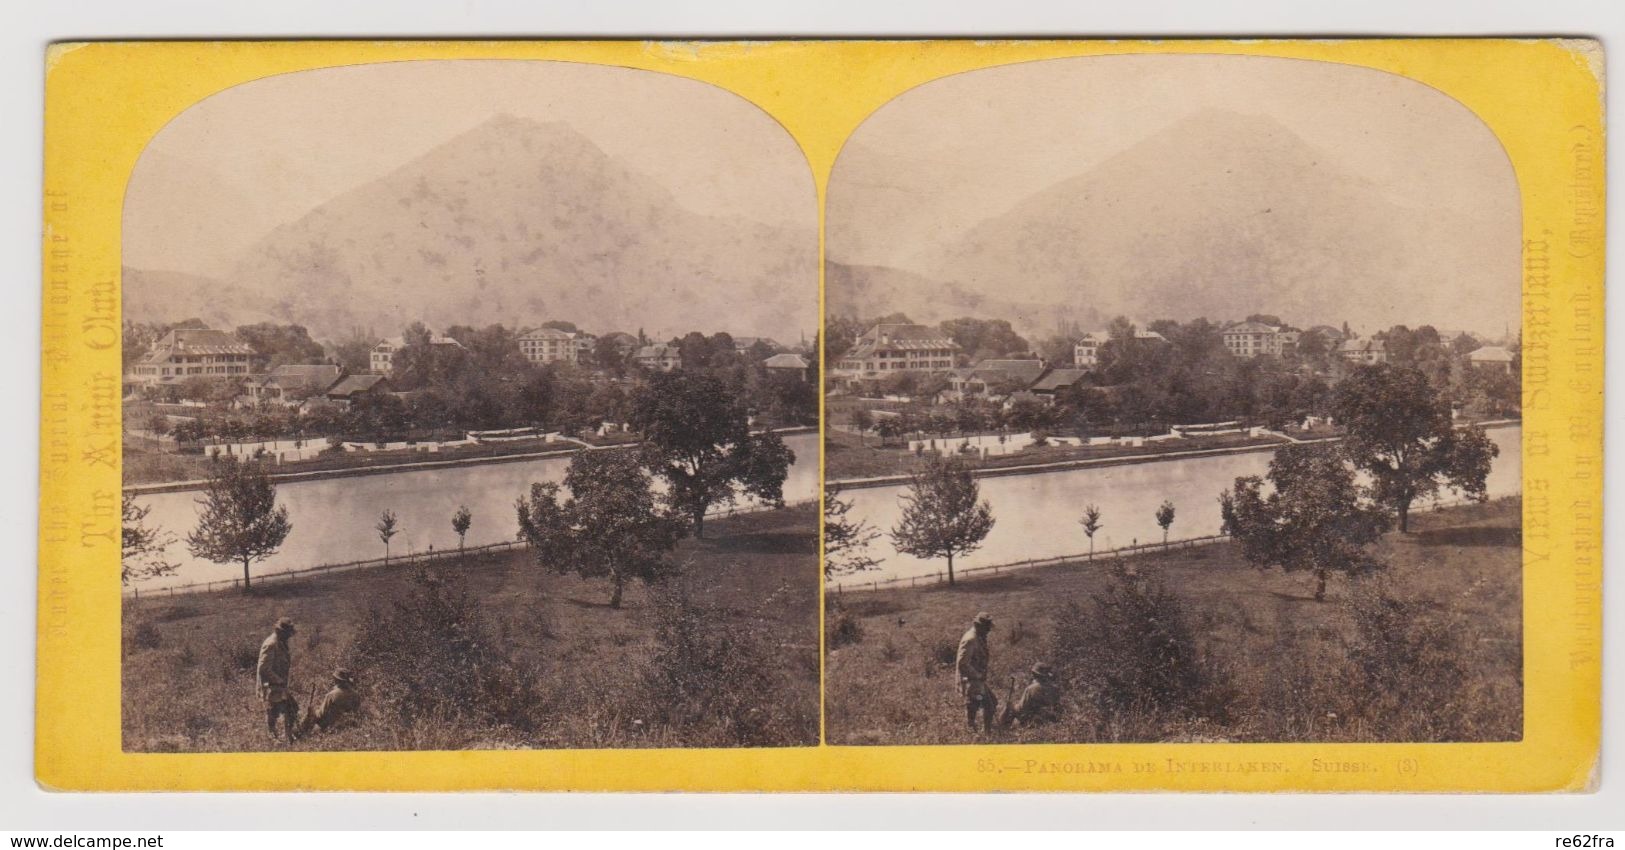 Suisse, Interlaken - Stereoview Stereophoto 3D - Years 1863 /1868 - Stereoscopio